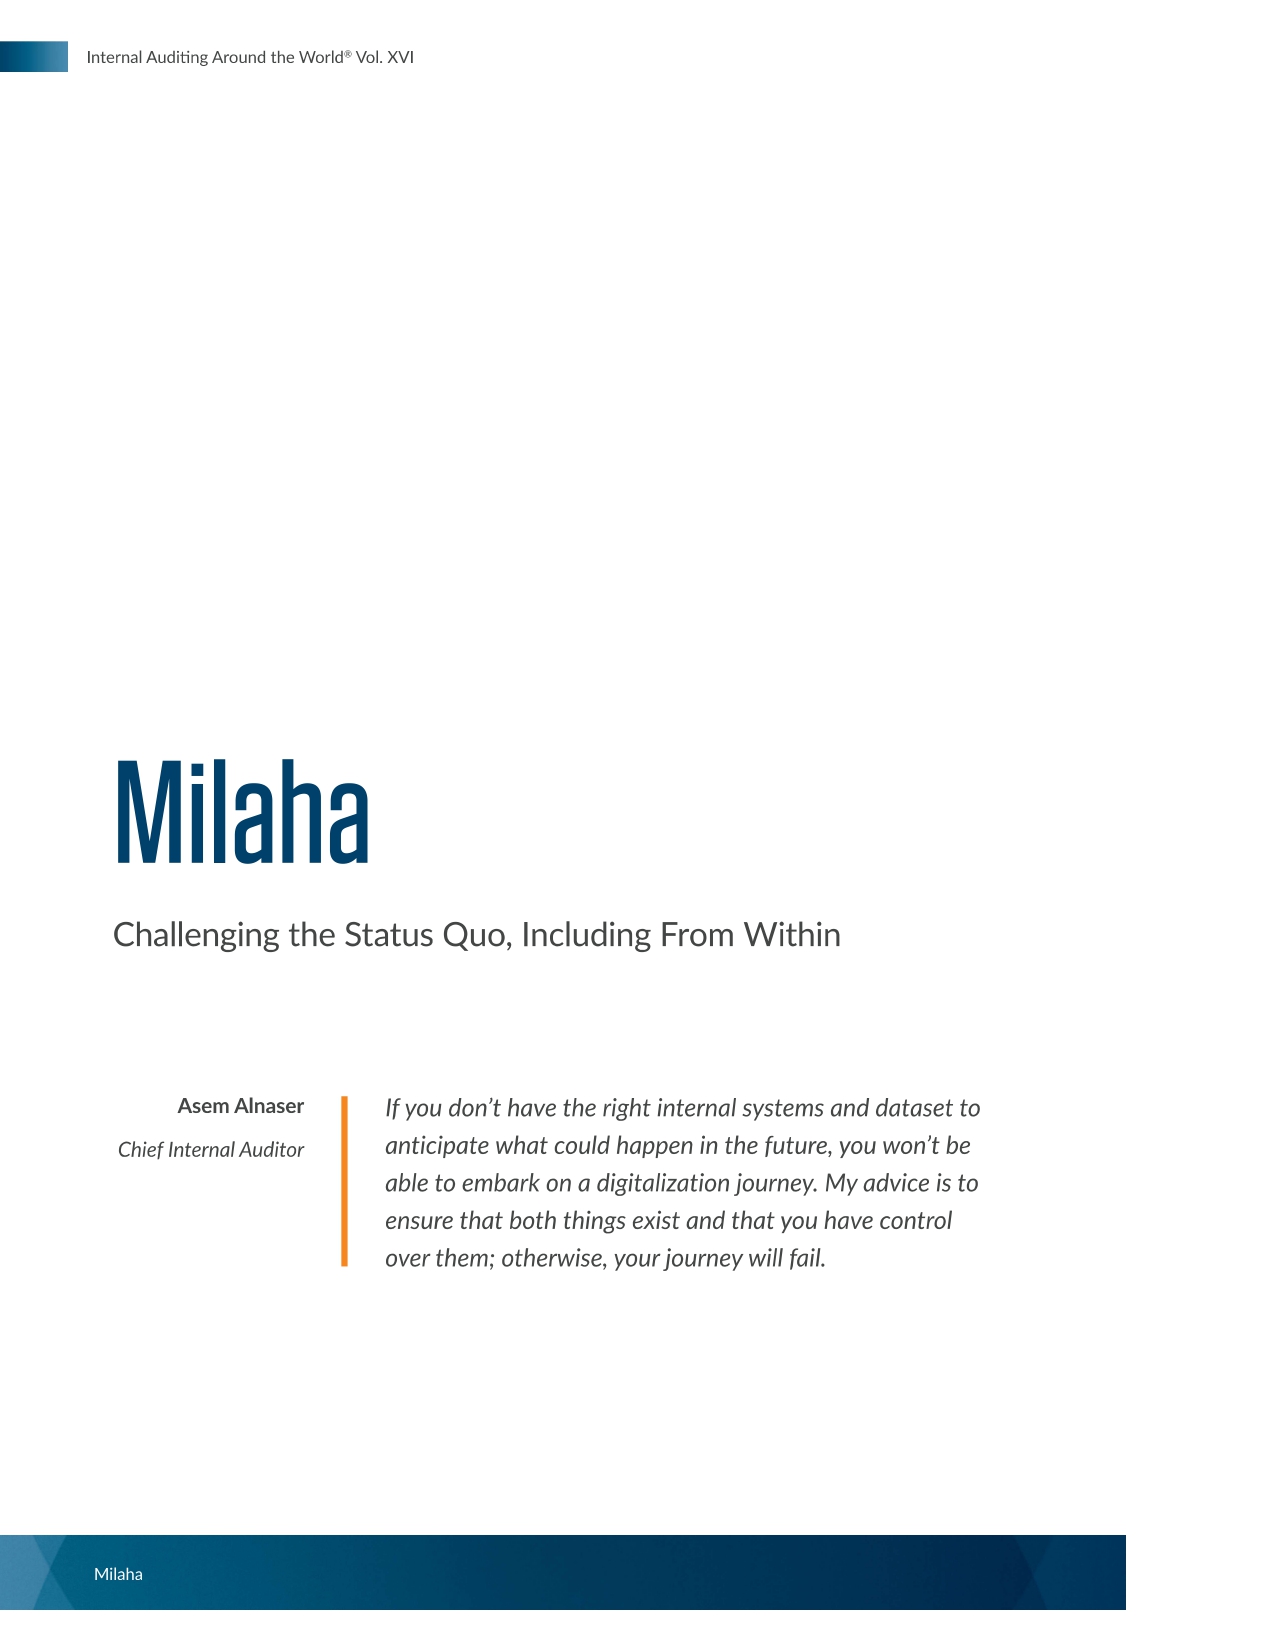 Screenshot of the first page of IAAroundWorld16 Protiviti Milaha